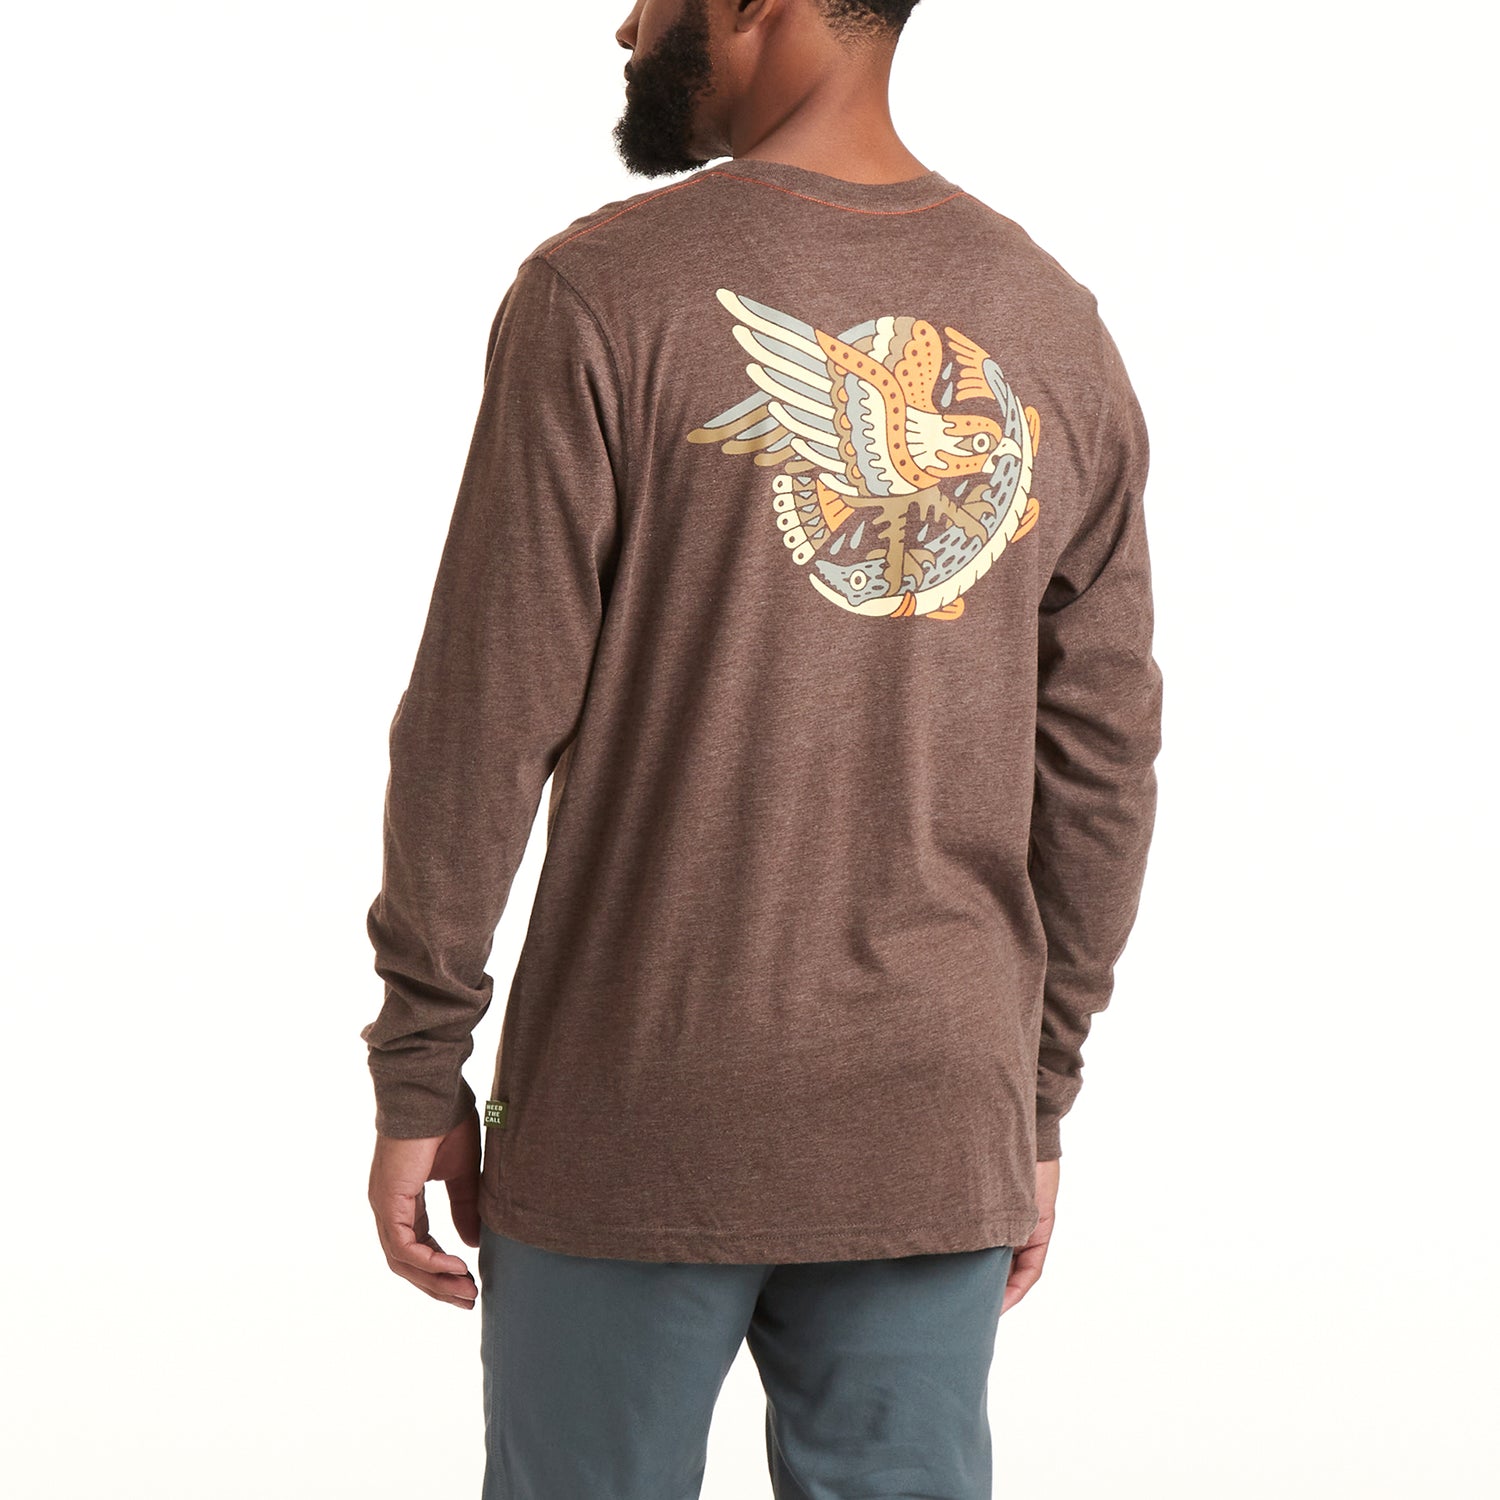 Osprey and Pike Select Longsleeve T-Shirt